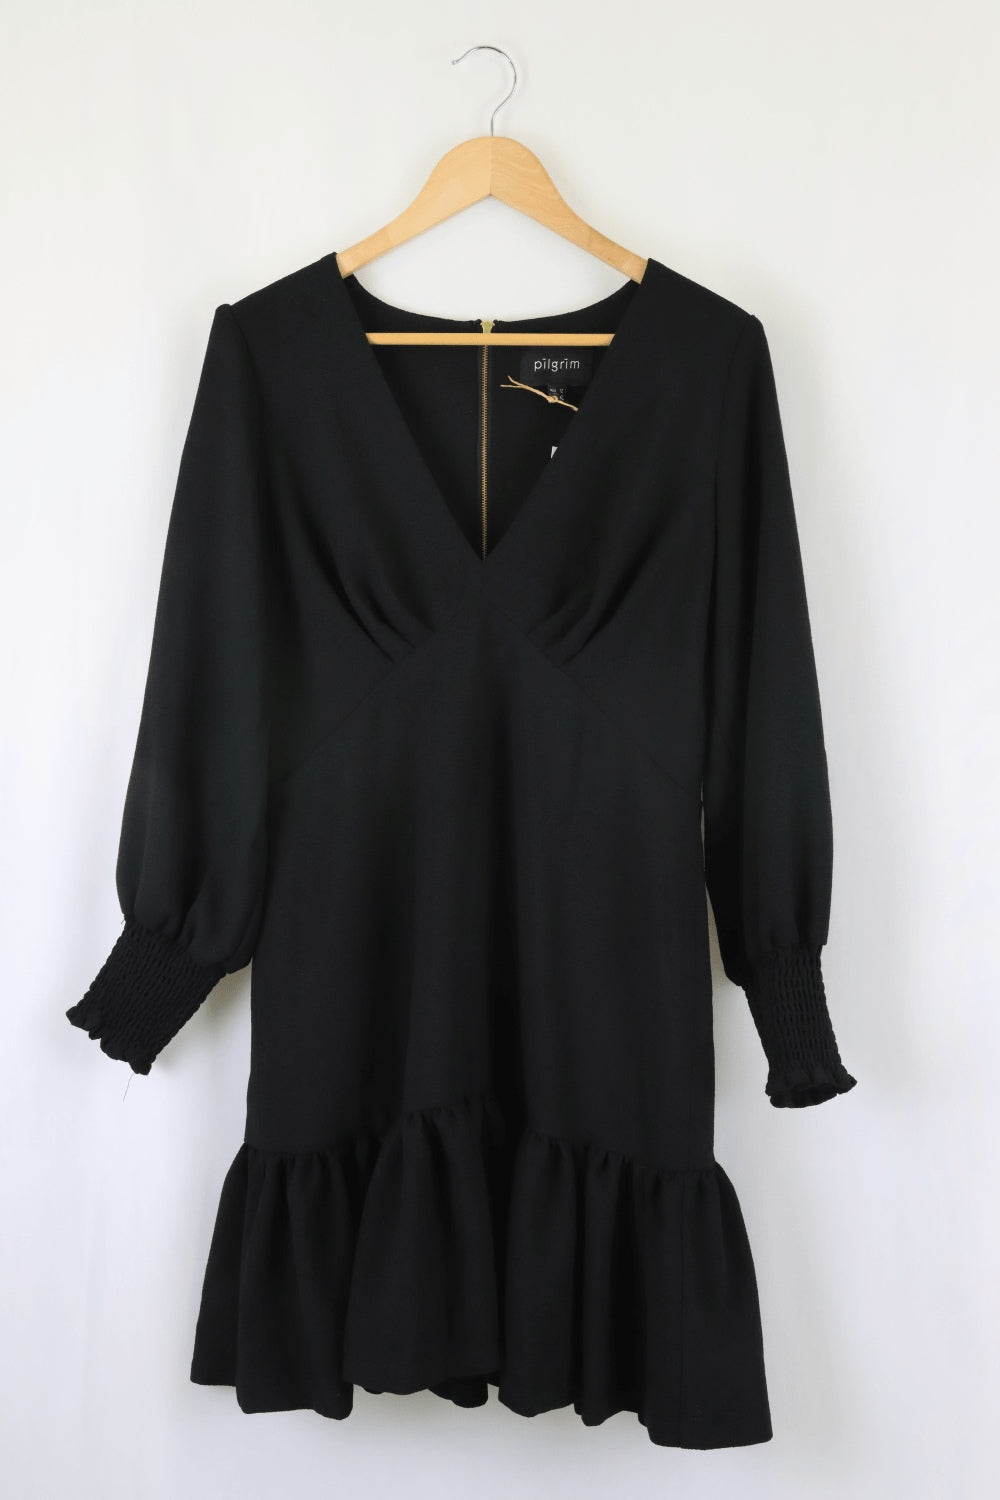 Pilgrim Black Dress 12